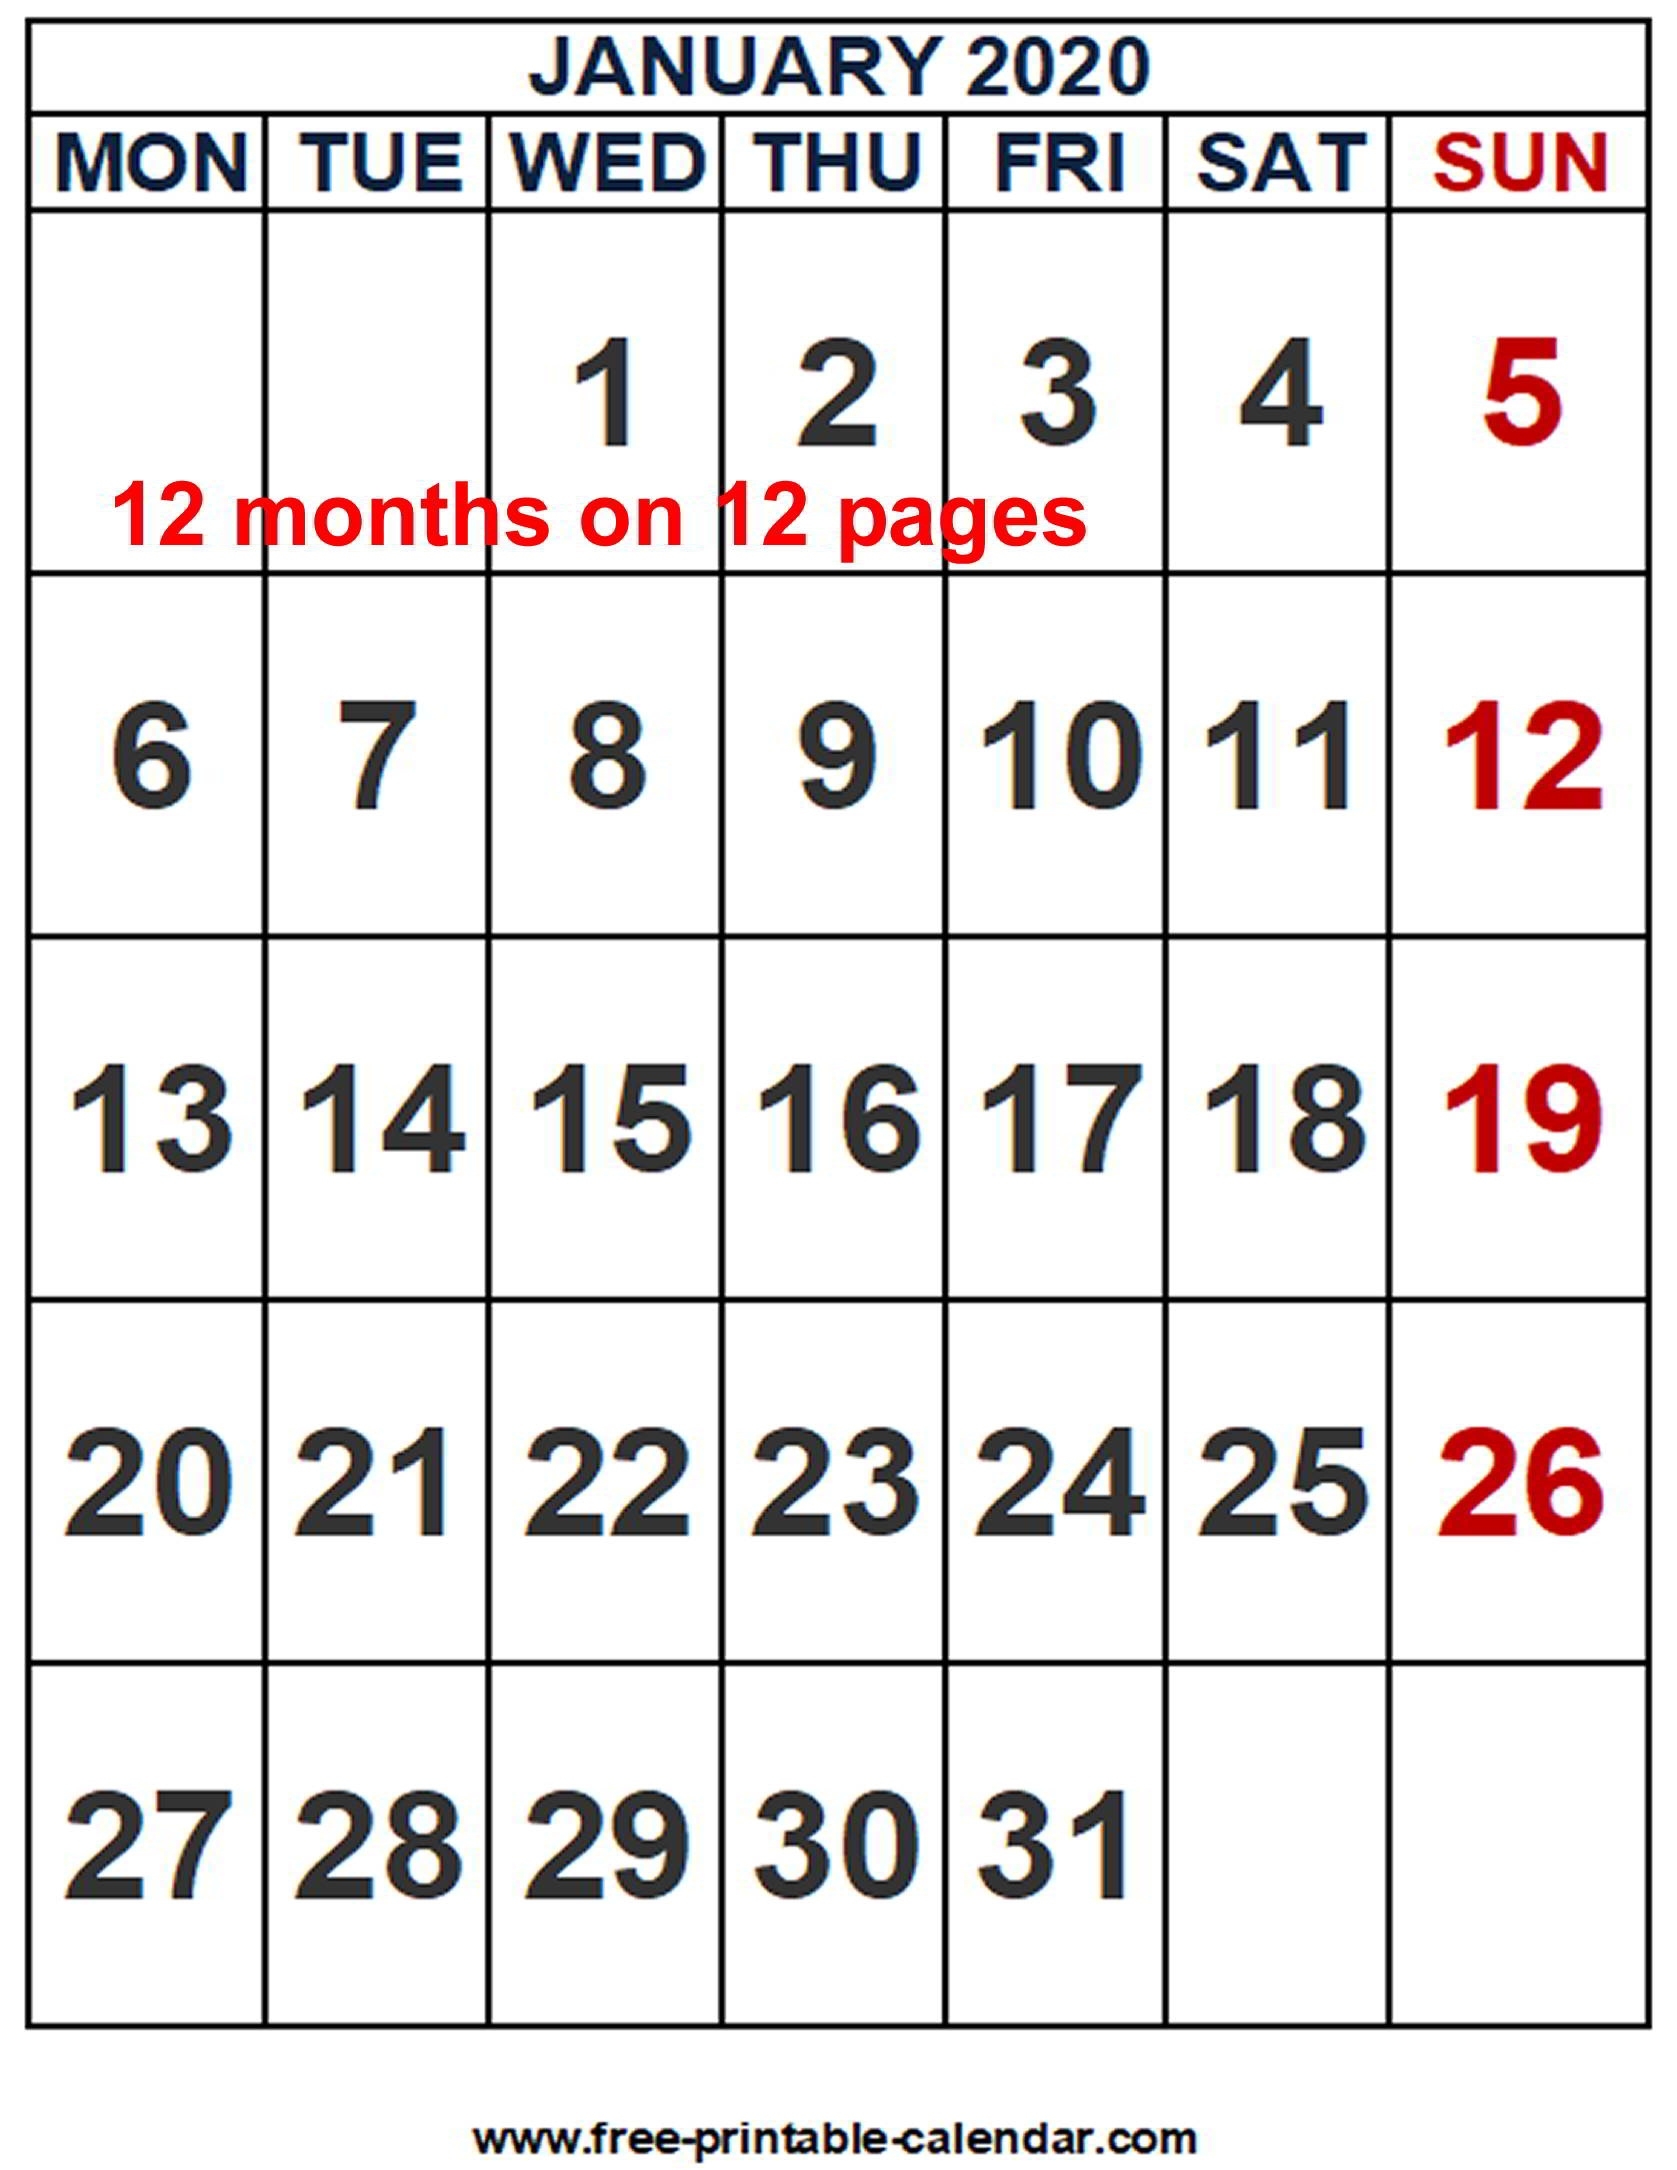 2020 Calendar Word Template - Free-Printable-Calendar Remarkable Calendar 2020 Printable Microsoft Word